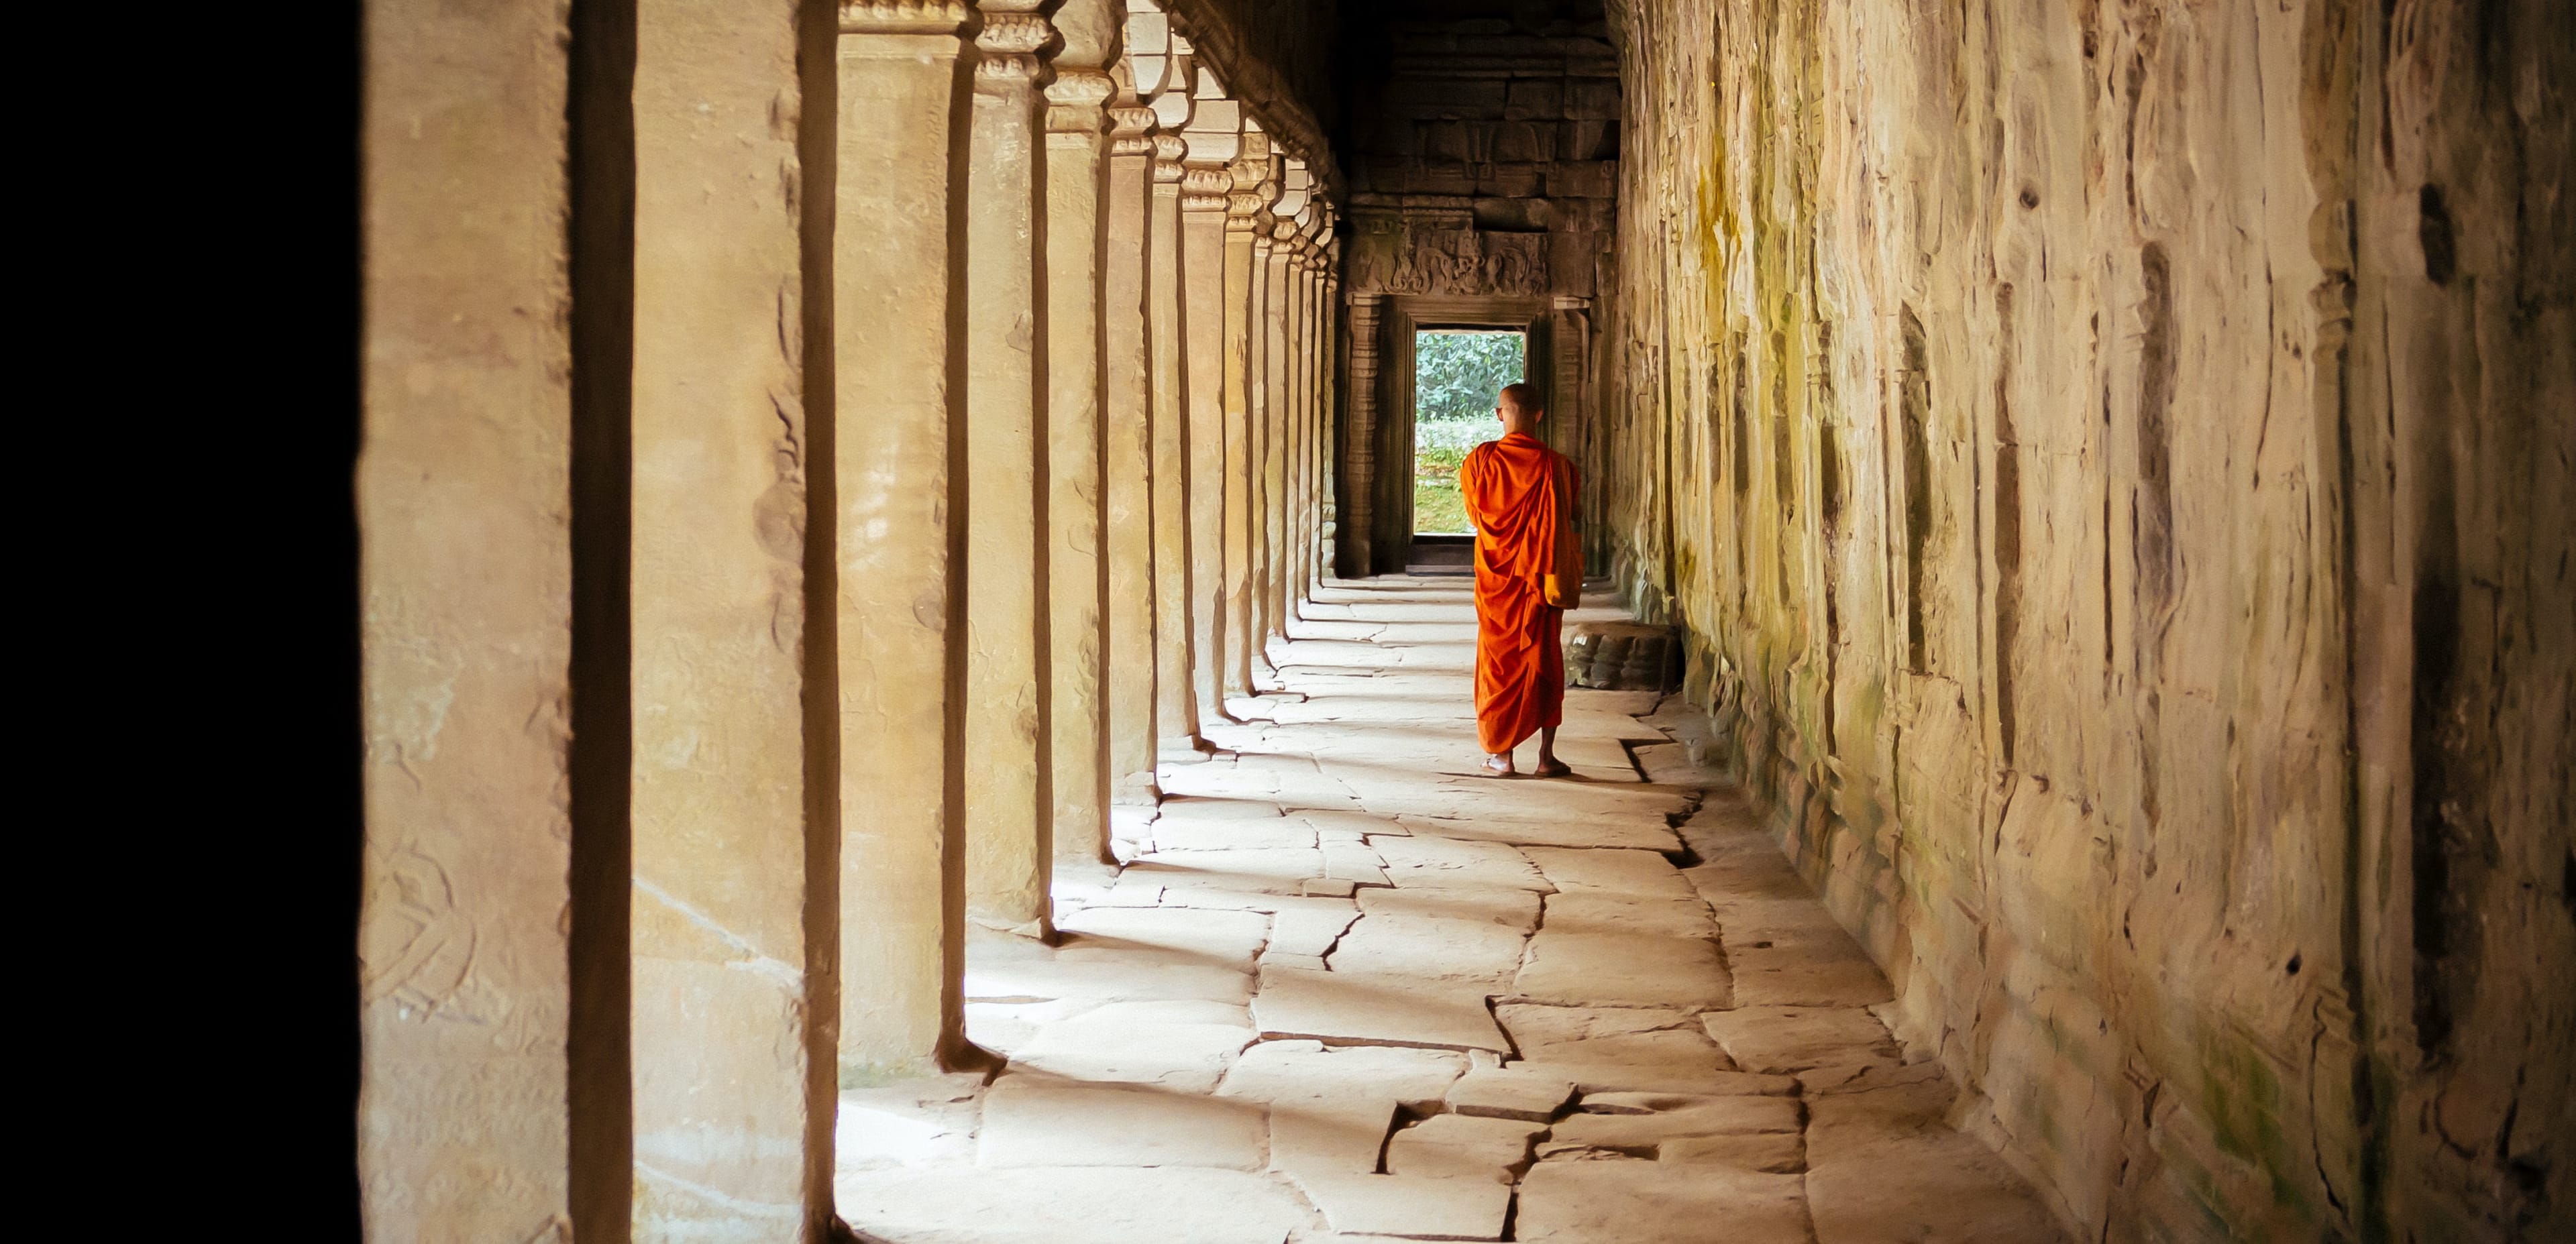 Monk in Cambodia